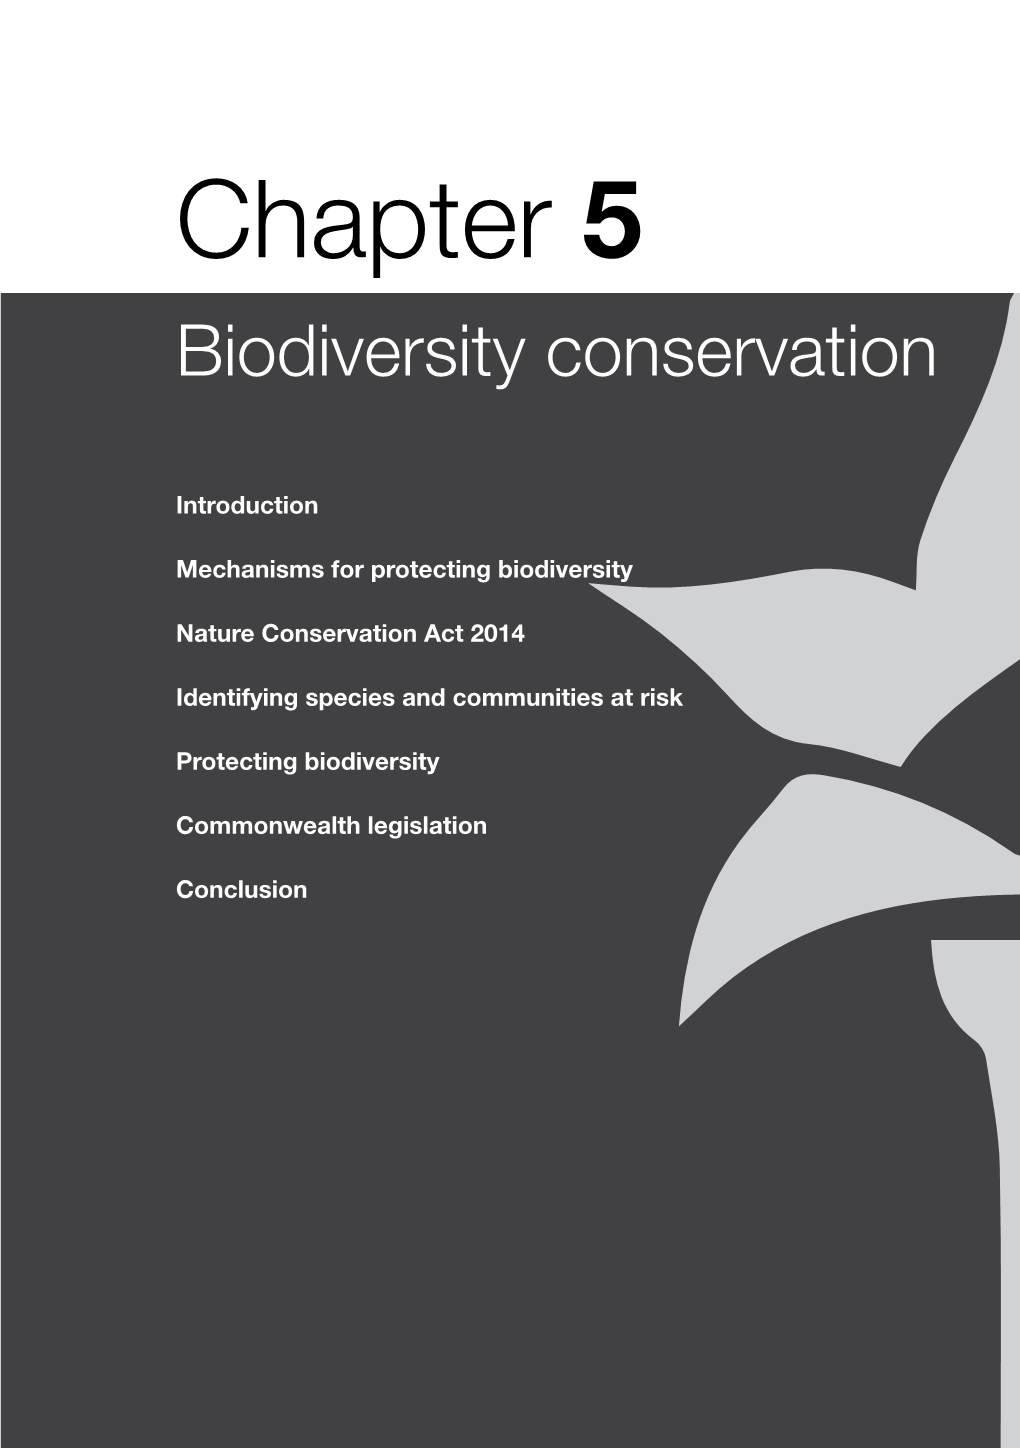 Chapter 5 – Biodiversity Conservation